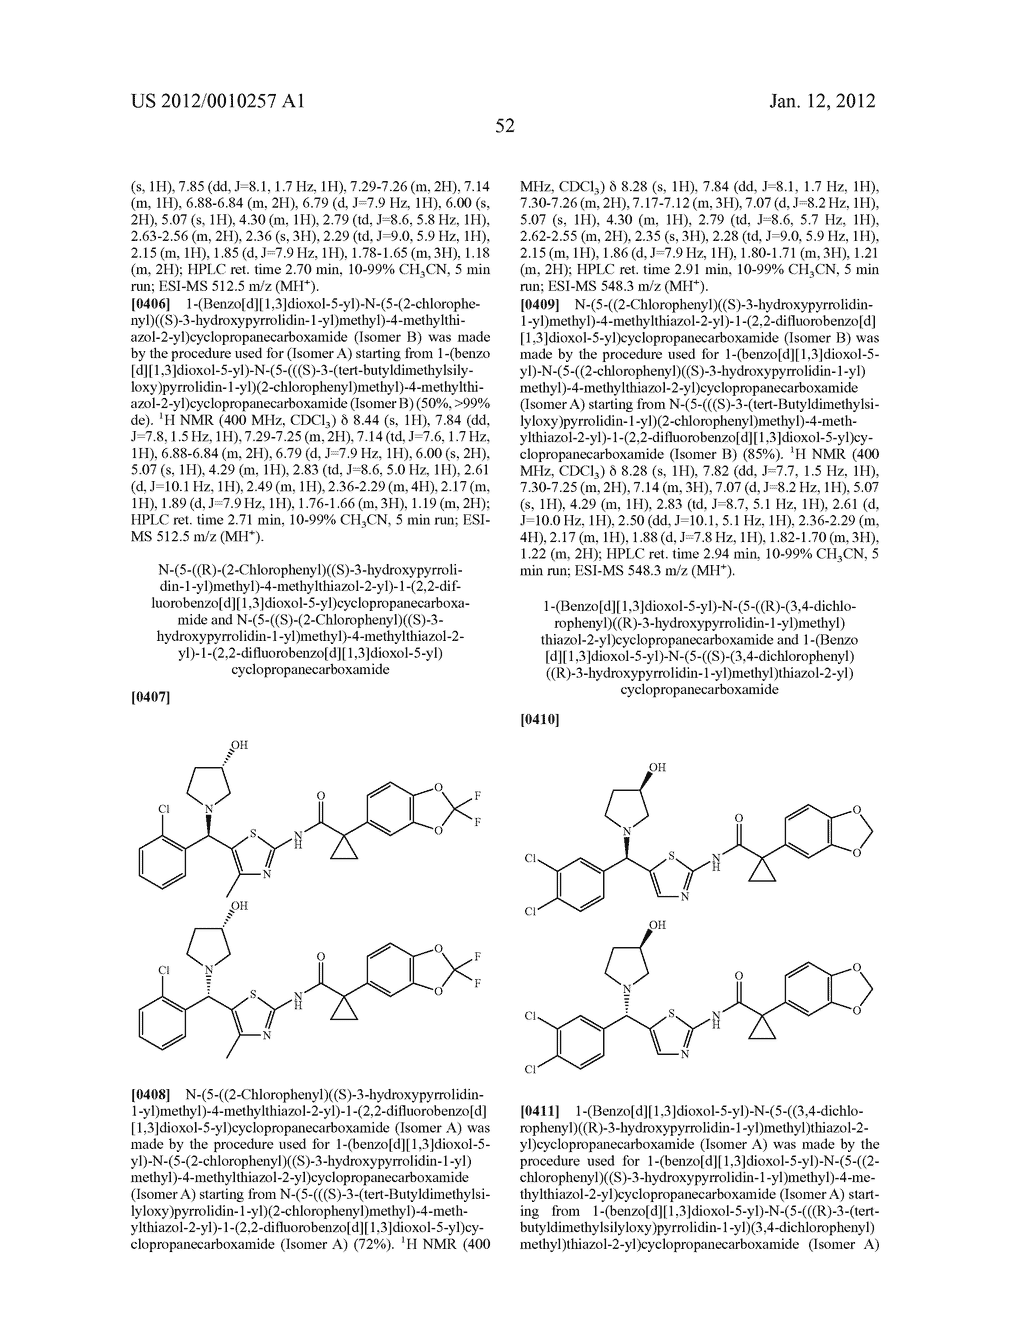 MODULATORS OF CYSTIC FIBROSIS TRANSMEMBRANE CONDUCTANCE REGULATOR - diagram, schematic, and image 53